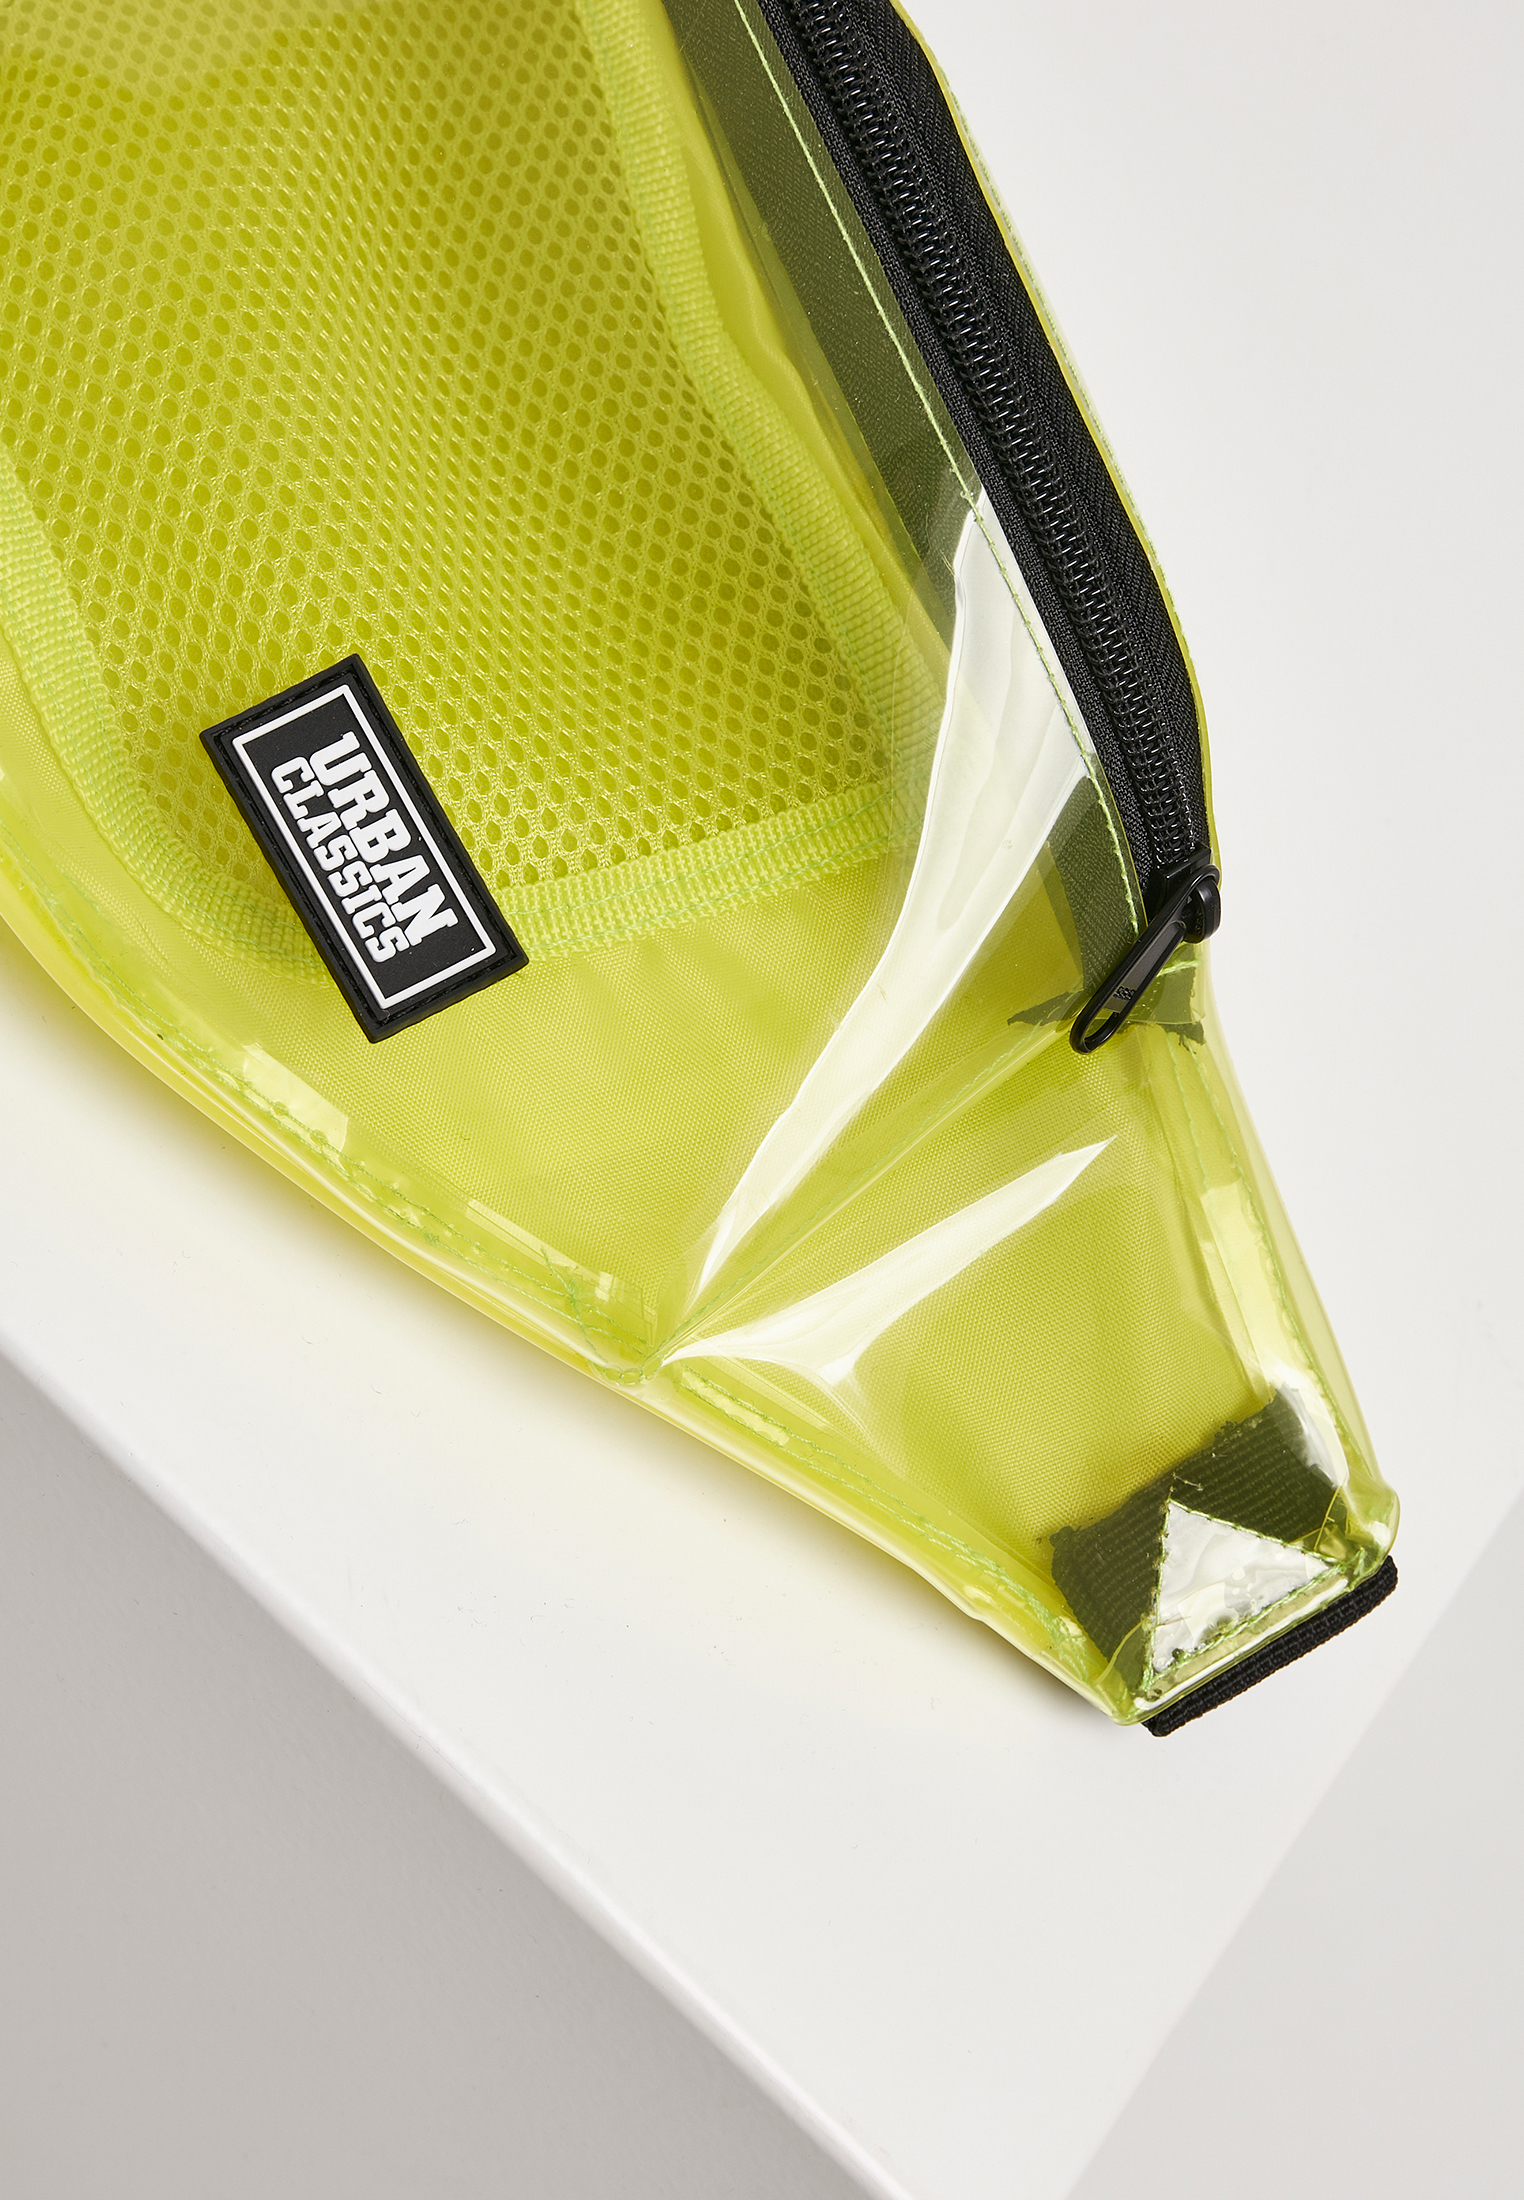 Taschen Transparent Shoulder Bag in Farbe transparent yellow